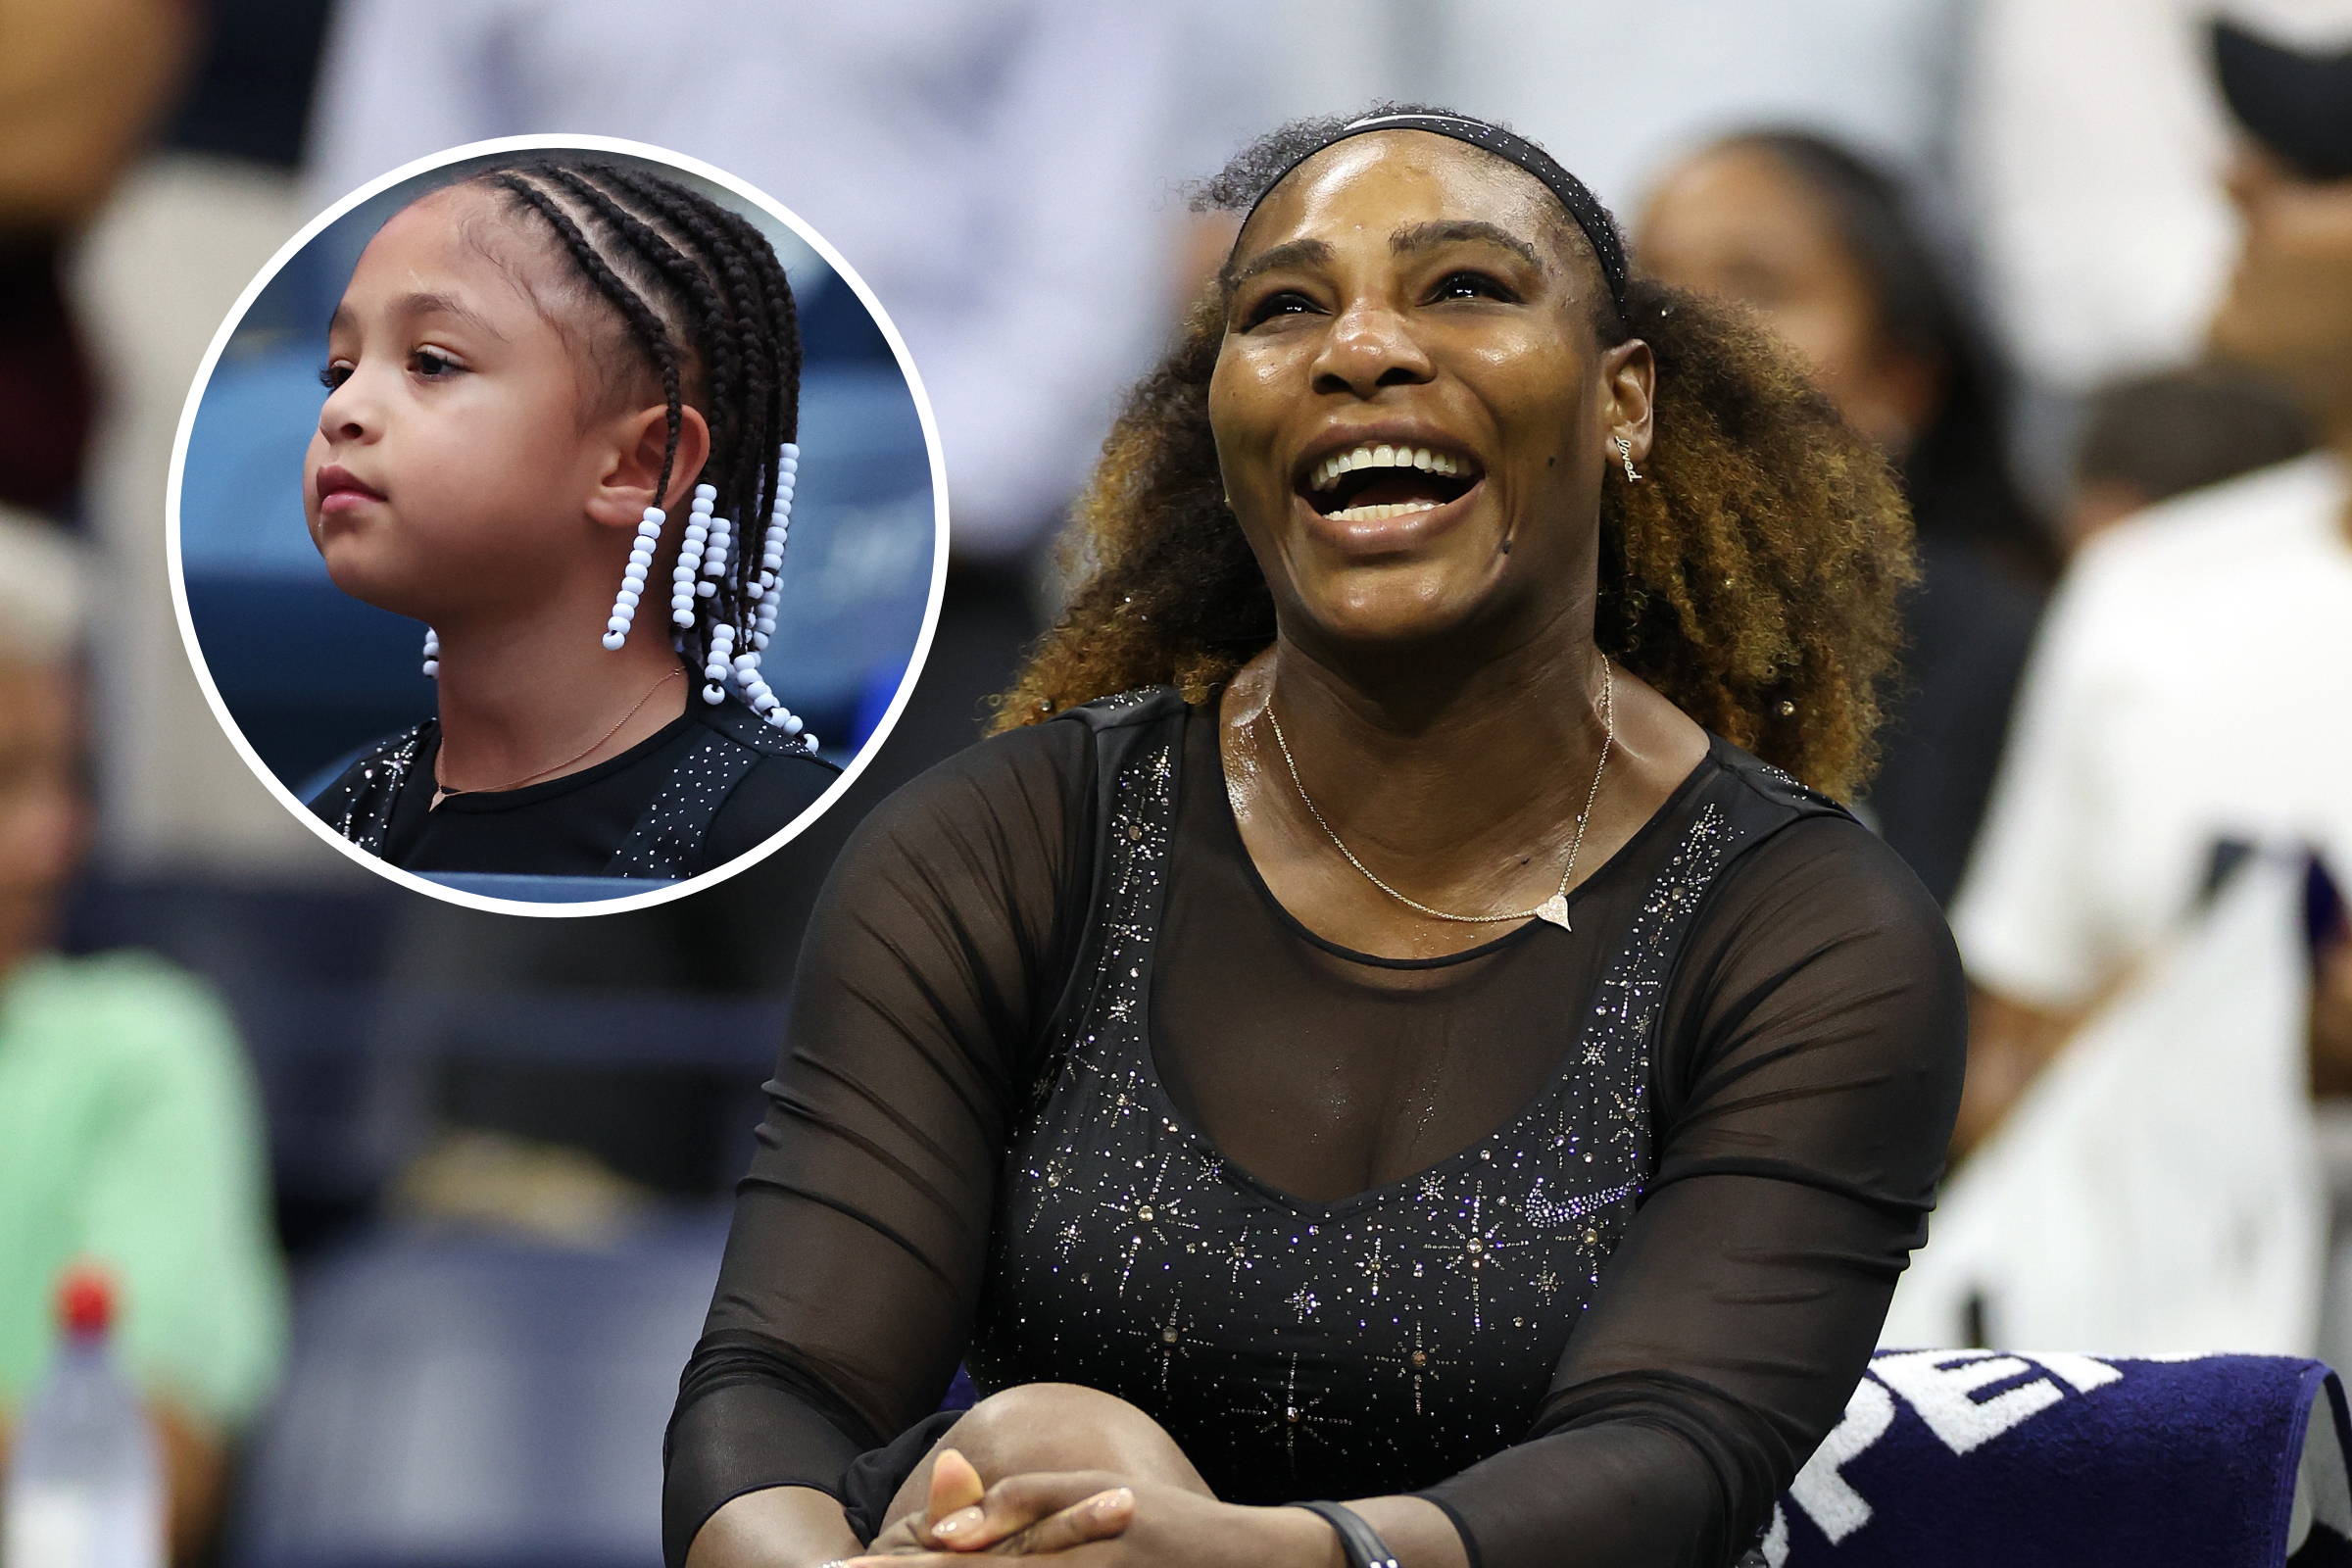 Serena Williams - Husband, Daughter & US Open